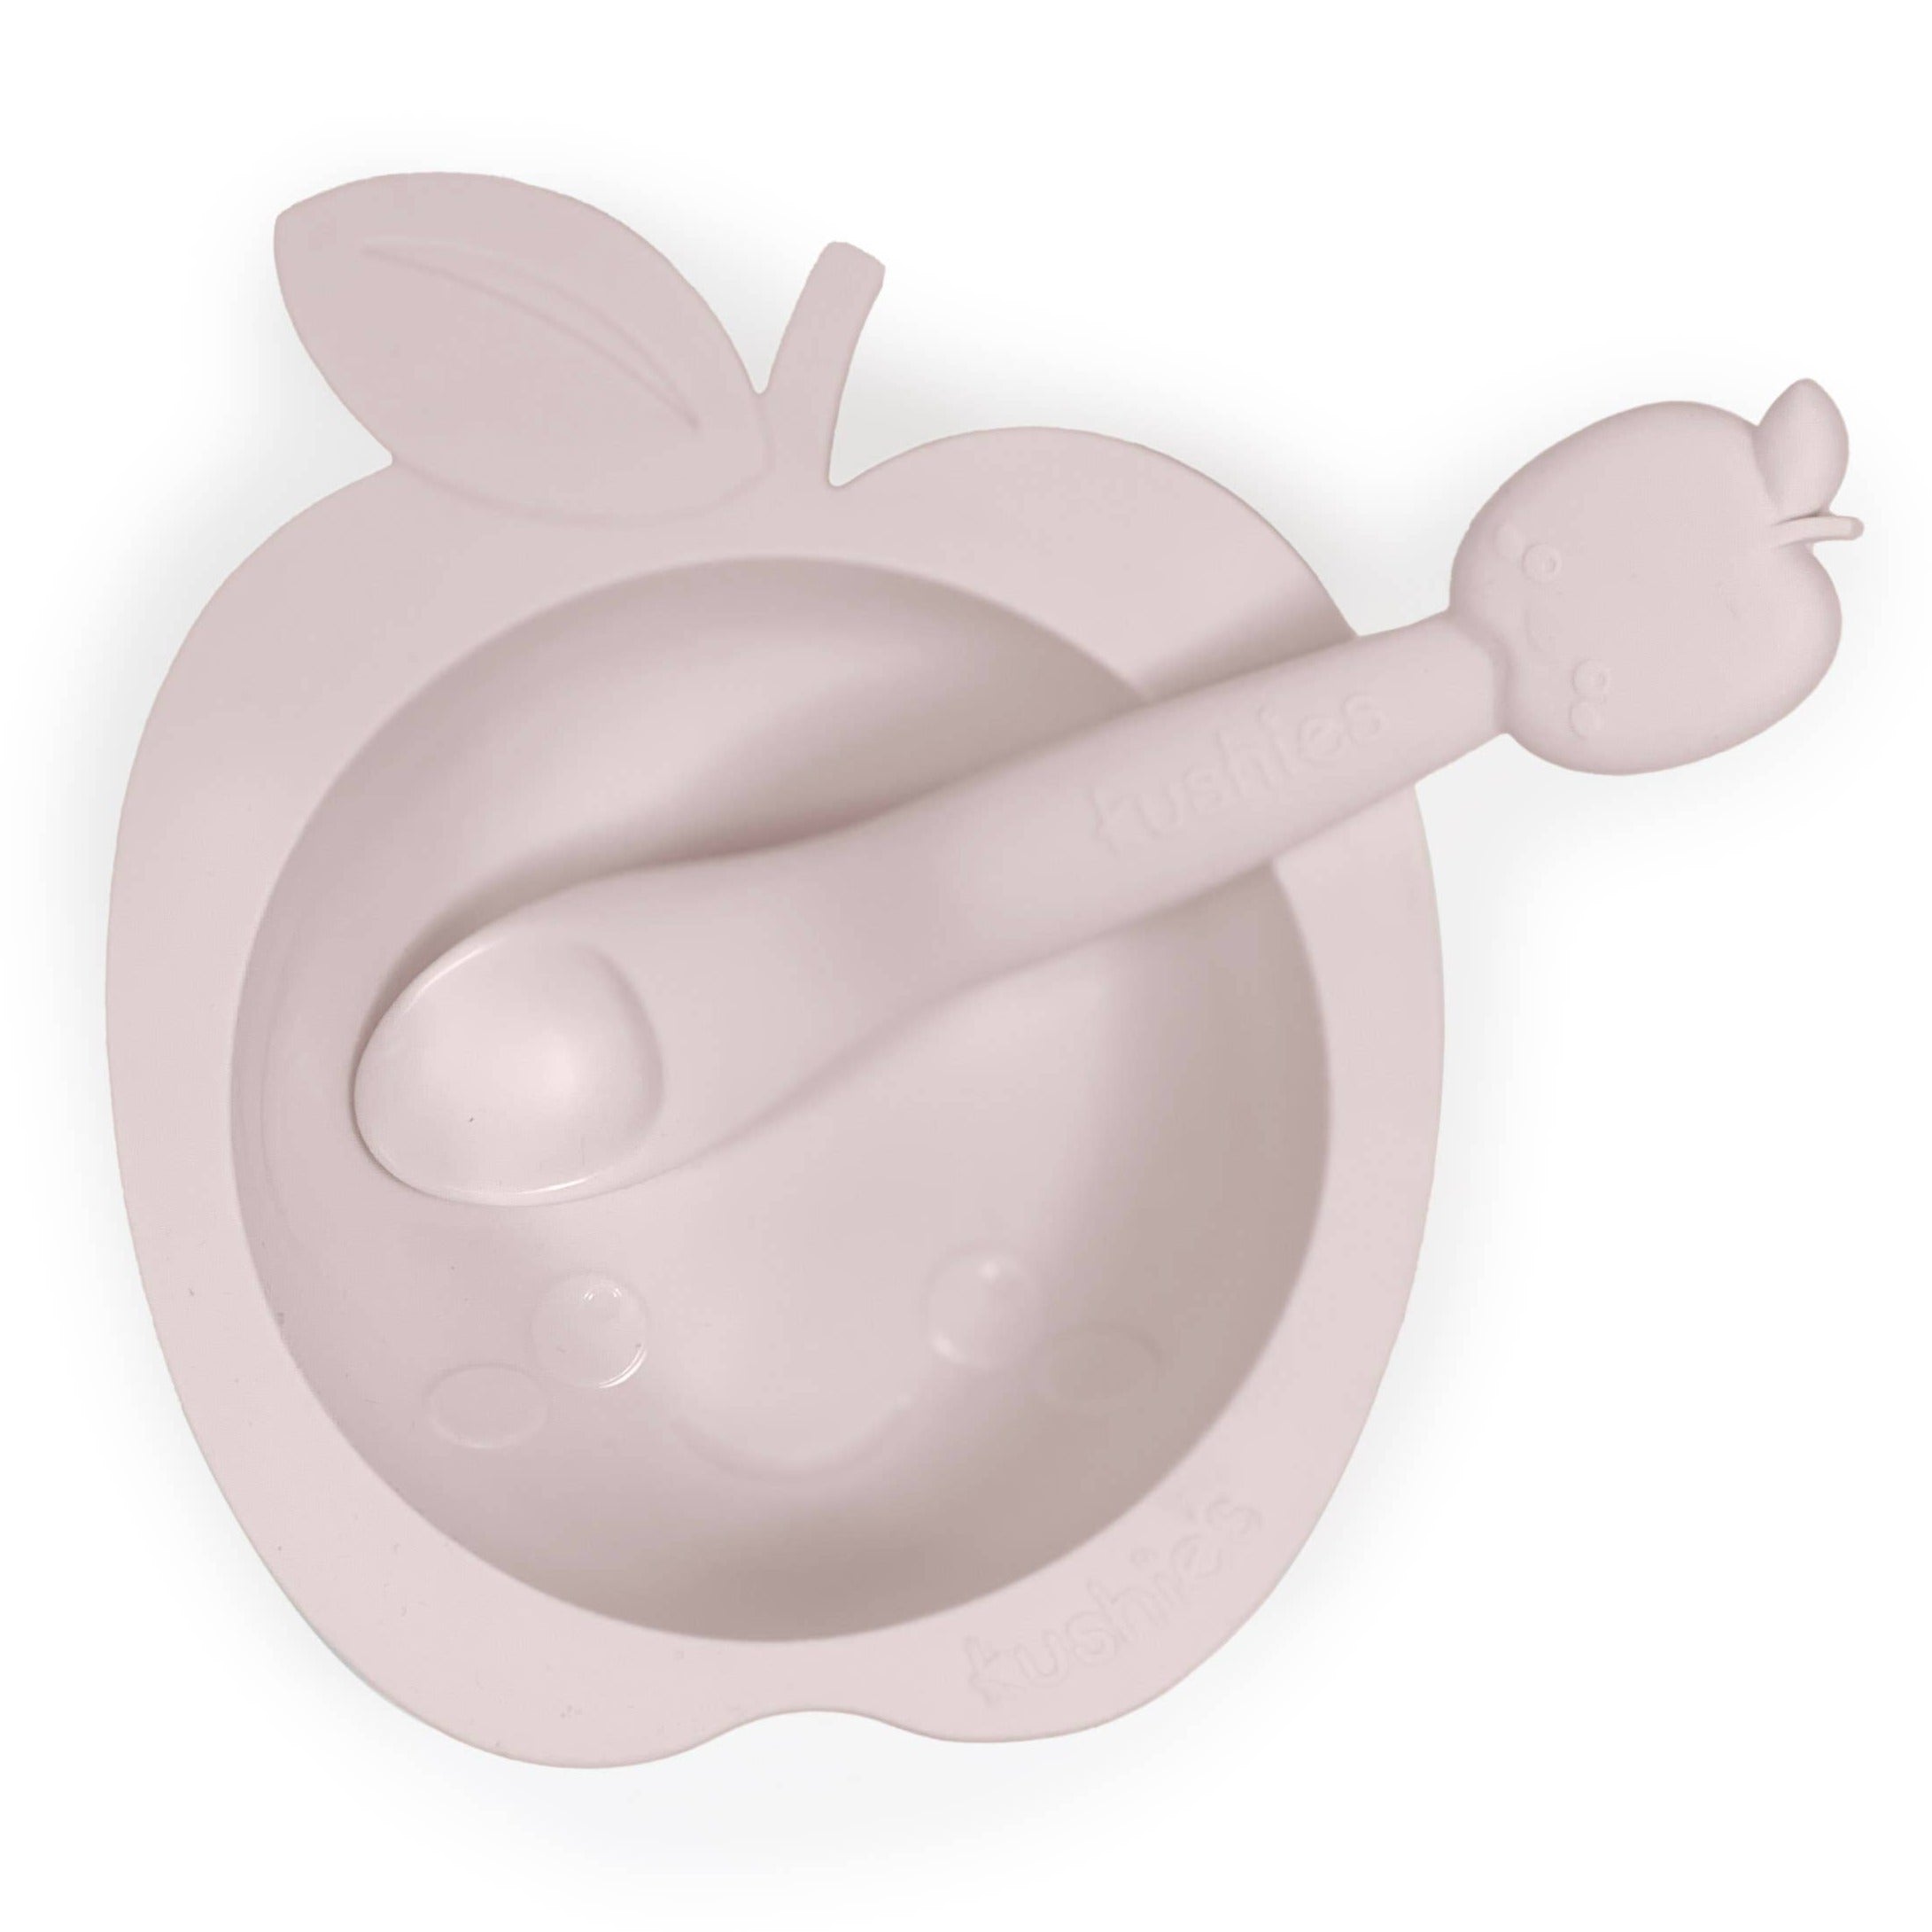 Silibowl Silicone Bowl + Spoon - Pink Apple